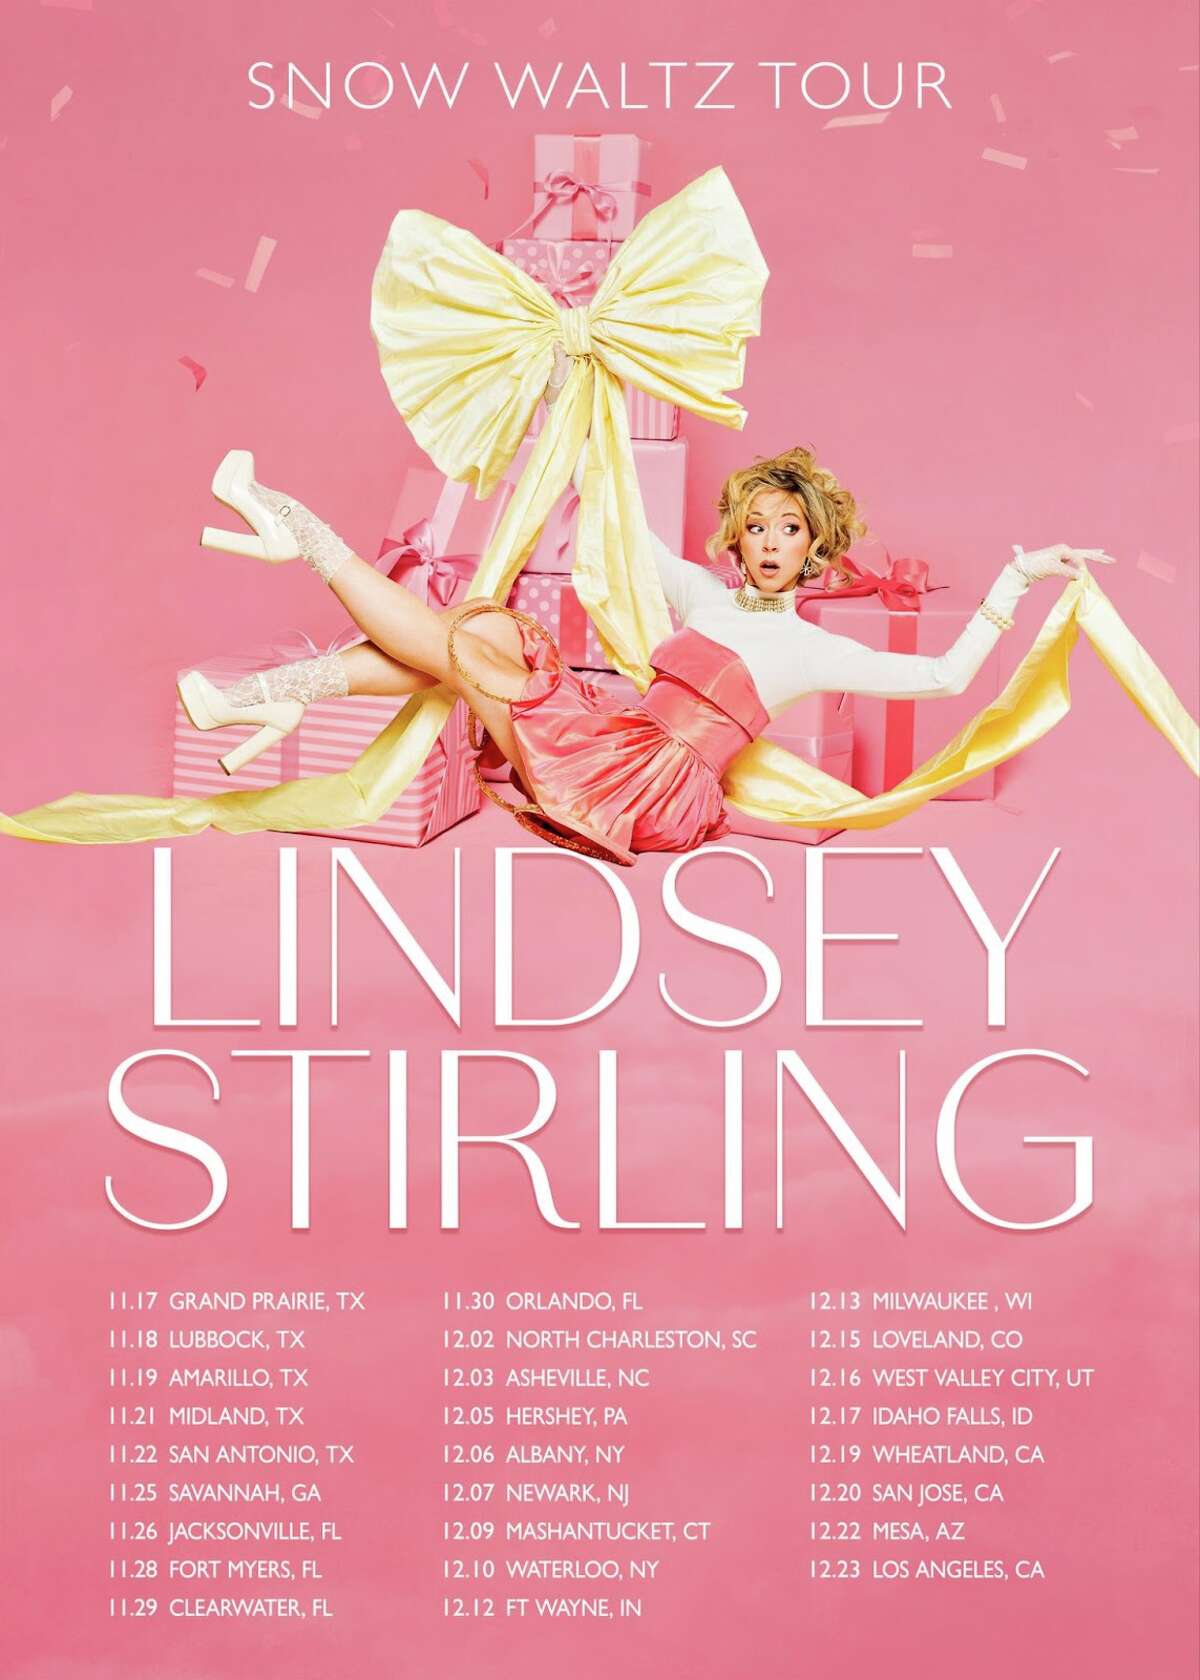 Lindsey Stirling's 'Snow Waltz' tour performs at Tobin Center